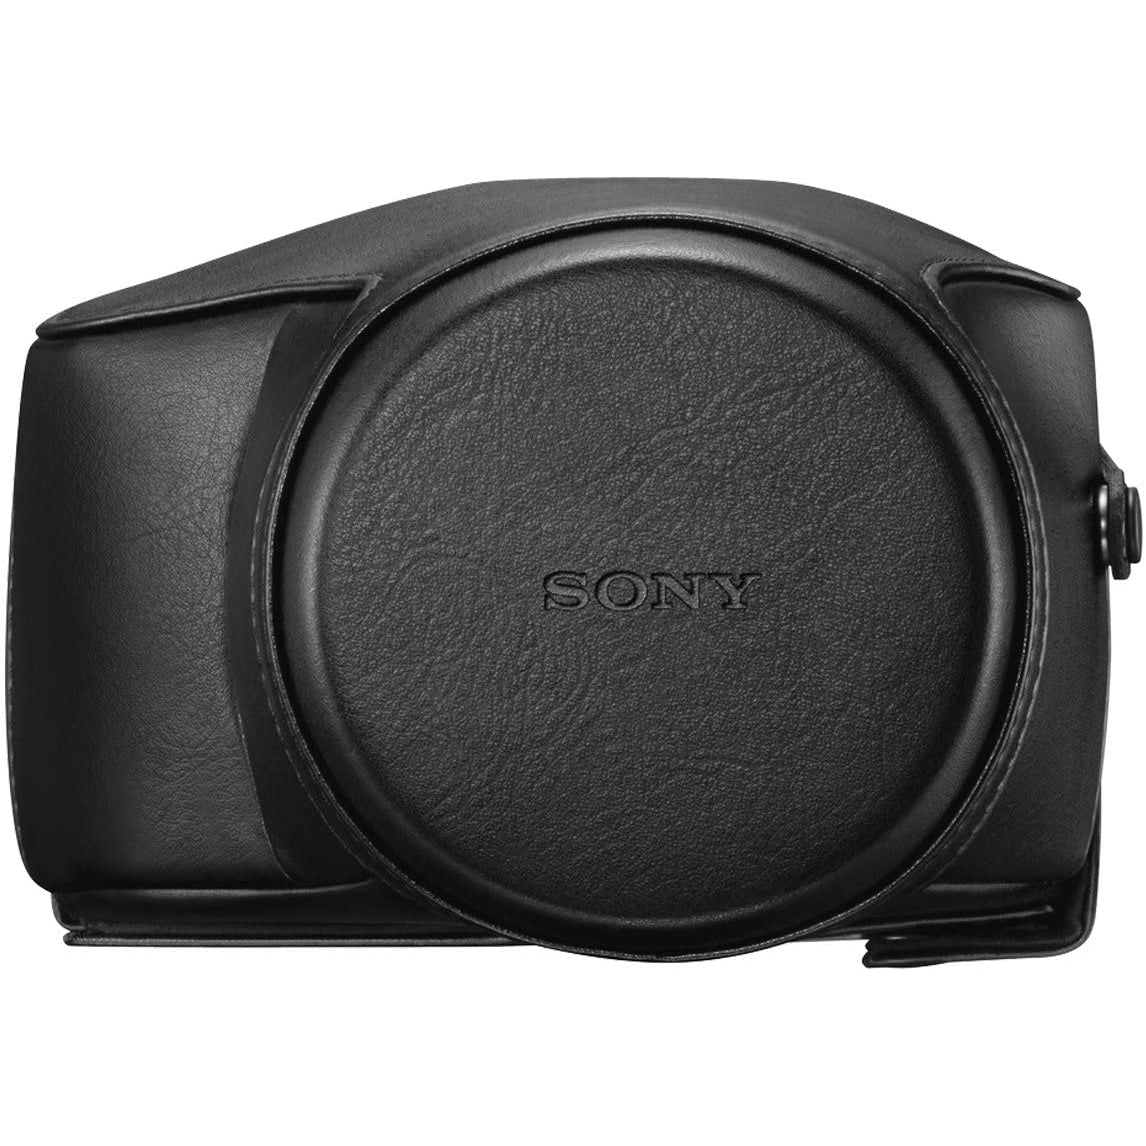 Sony Cyber-Shot Jacket Case LCJ-RXJ Protective Camera Case - Refurbished